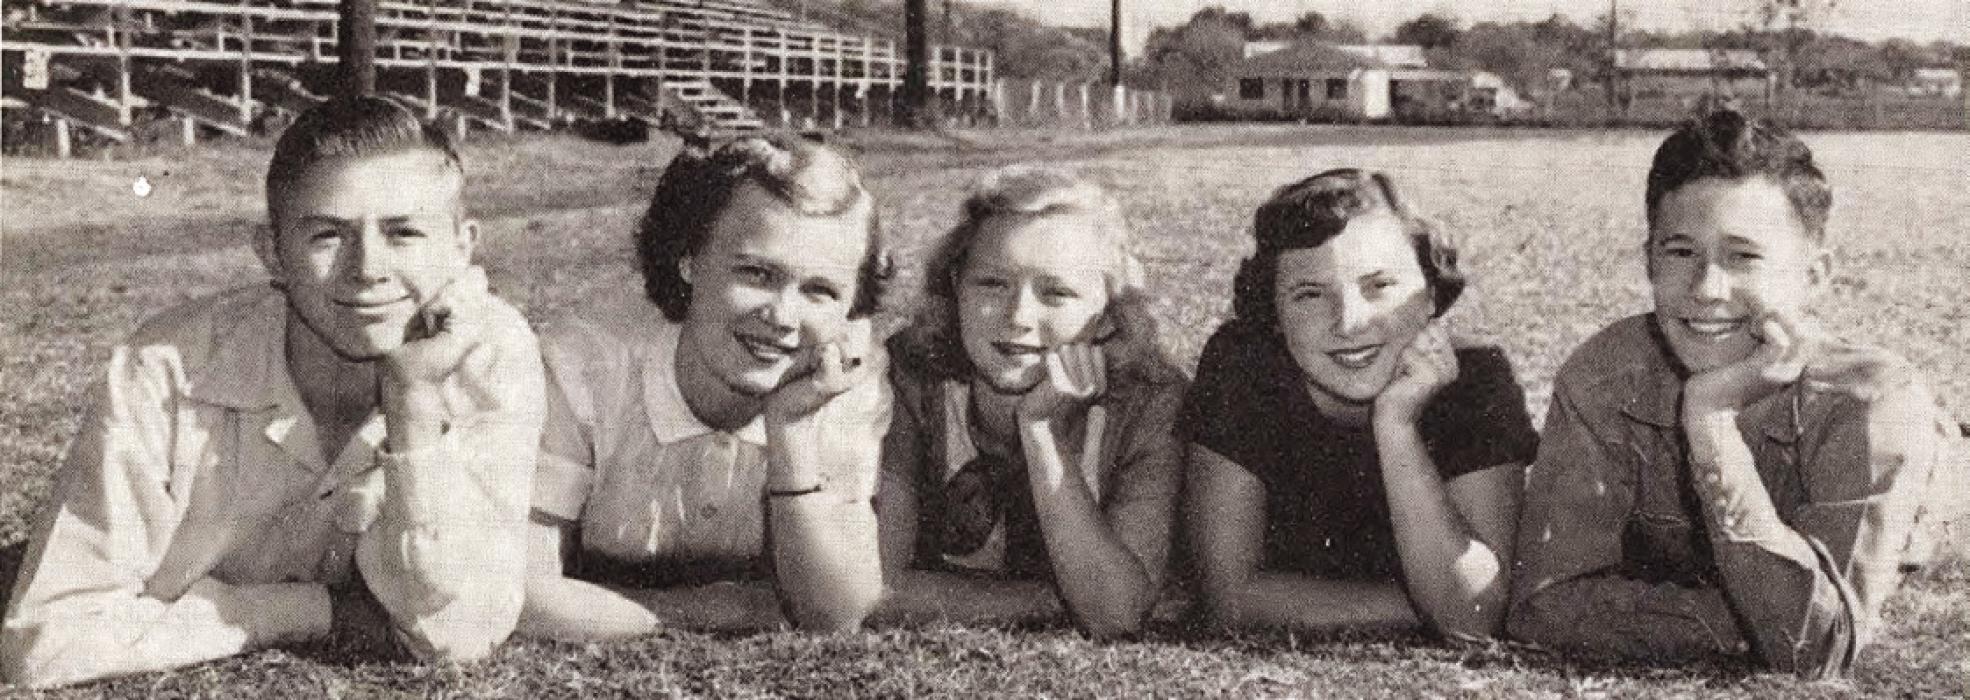 La Grange High School’s 1953 junior class officers were: William Hackebeil, secretary; Dorothy Hohle, vice president; Virginia Mika Leech, treasurer; Jean Foyt, reporter and Gene Harvey Dipple, president.